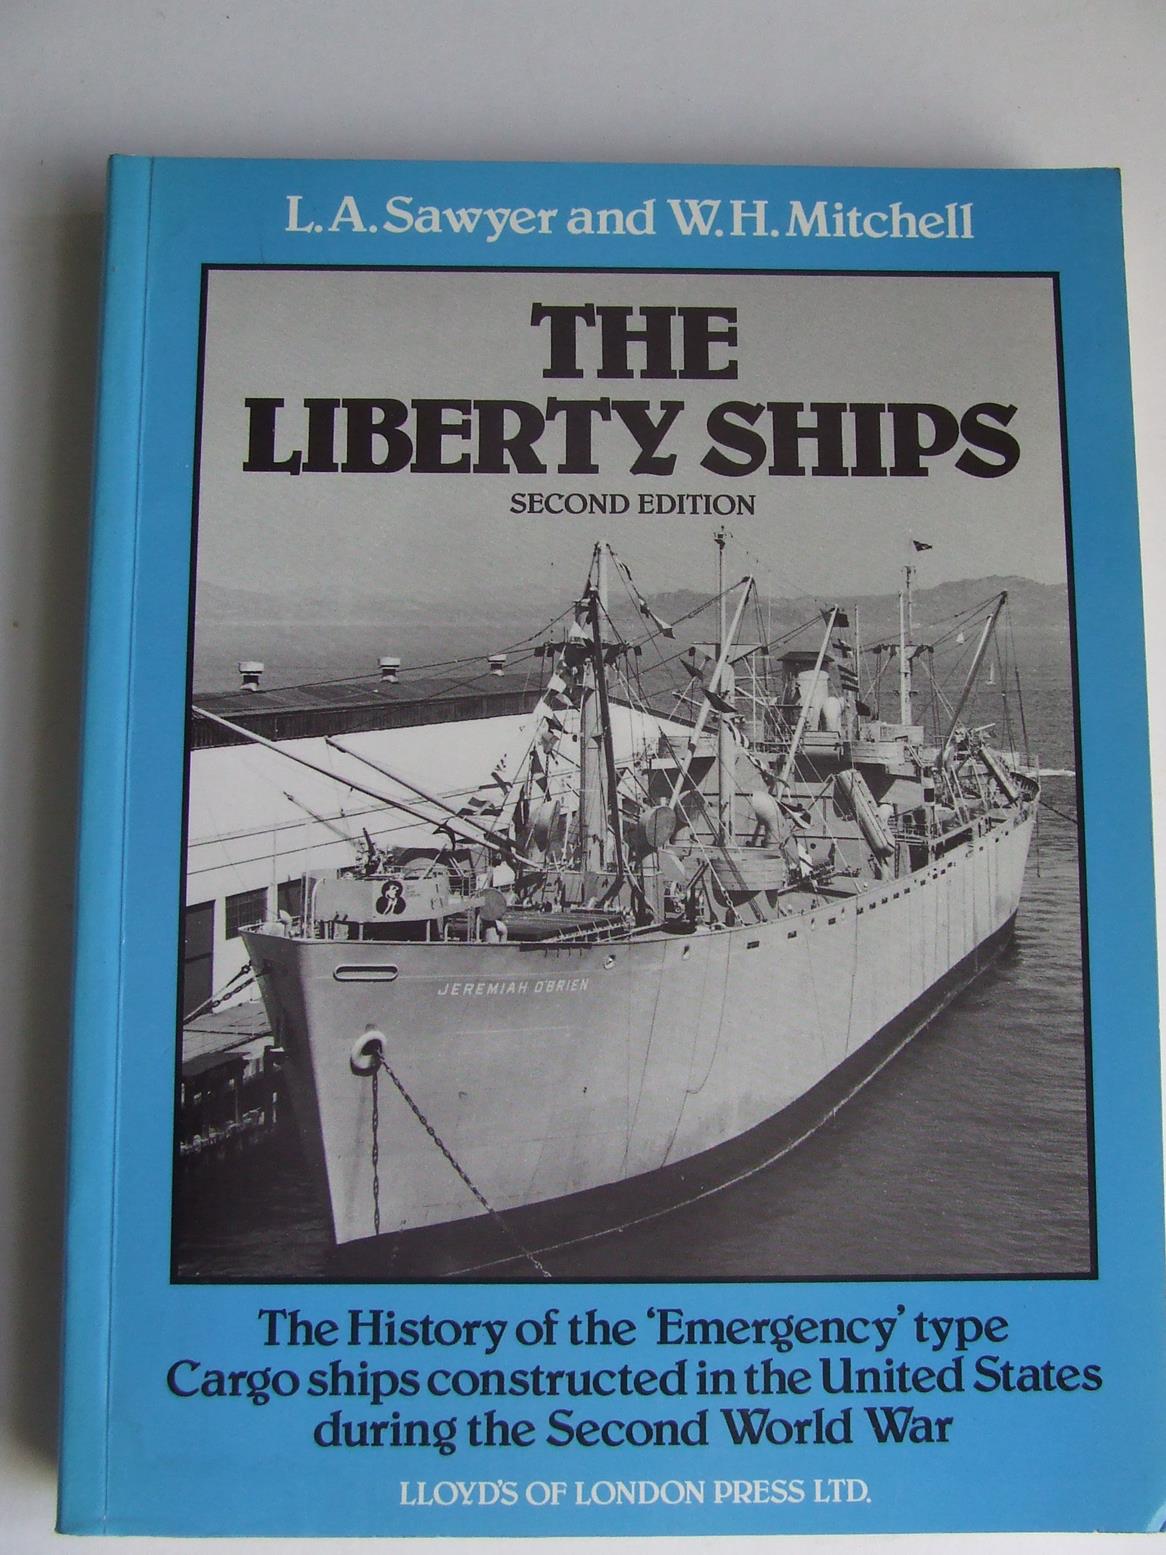 The Liberty Ships